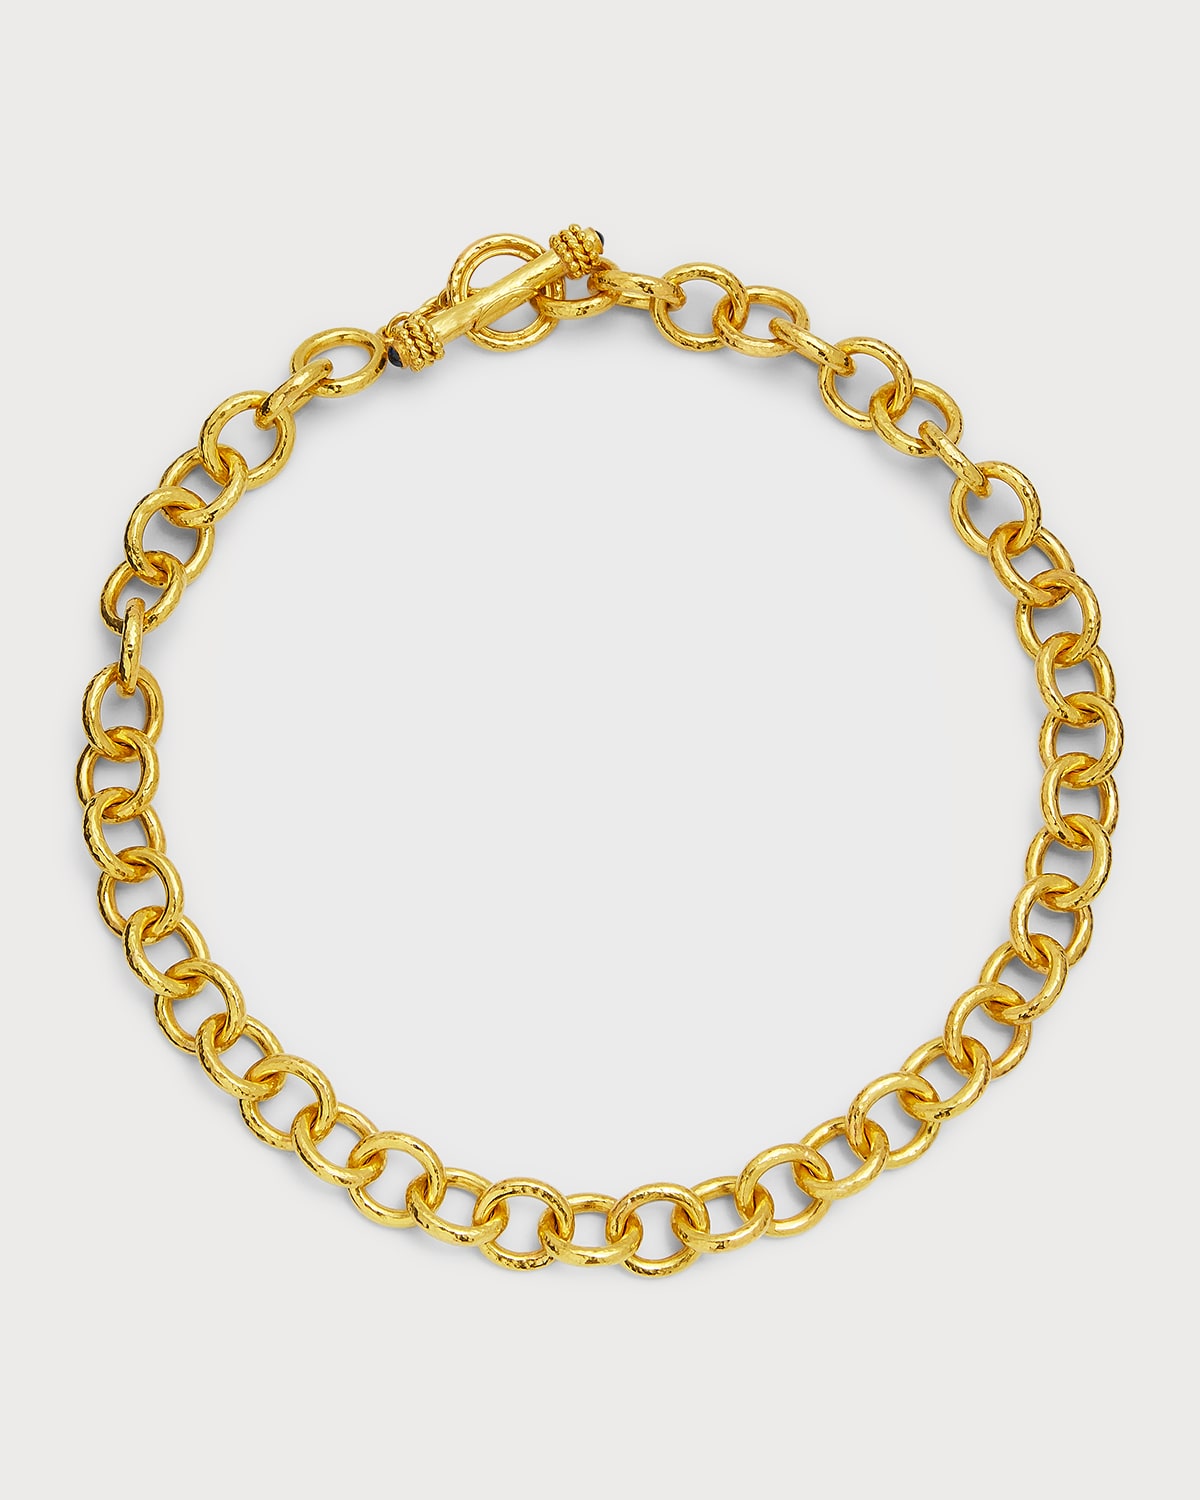 Montecatini 19k Link Necklace